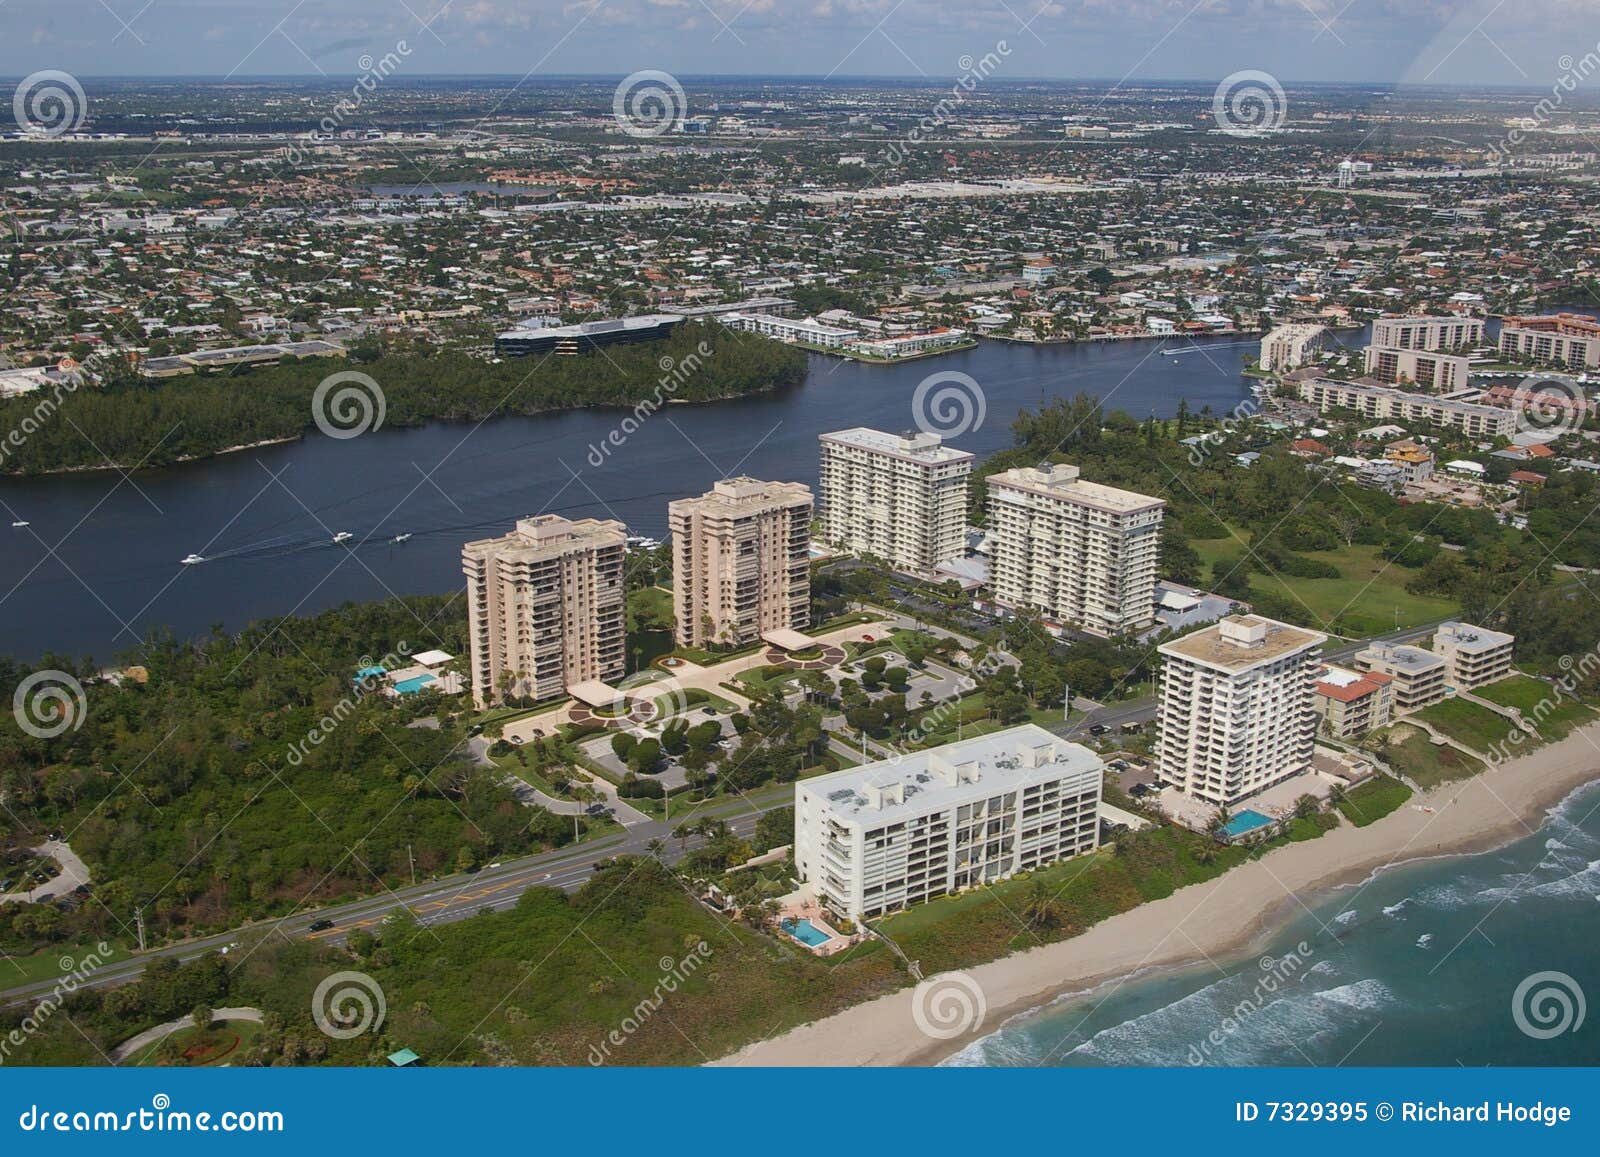  City  of Boca  Raton  stock image Image of florida  beach 